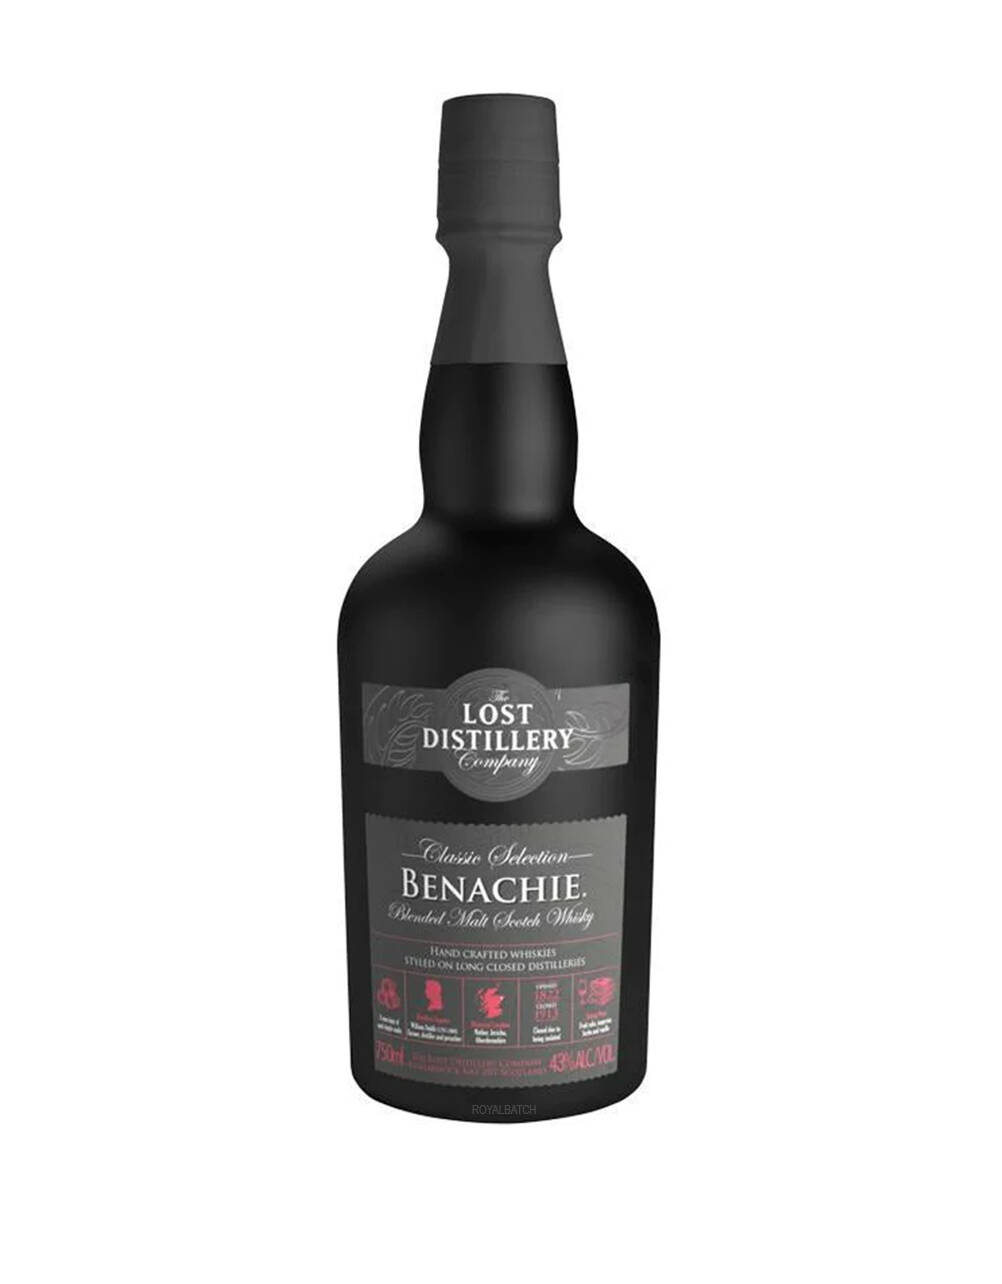 The Lost Distillery Benachie Scotch Whisky